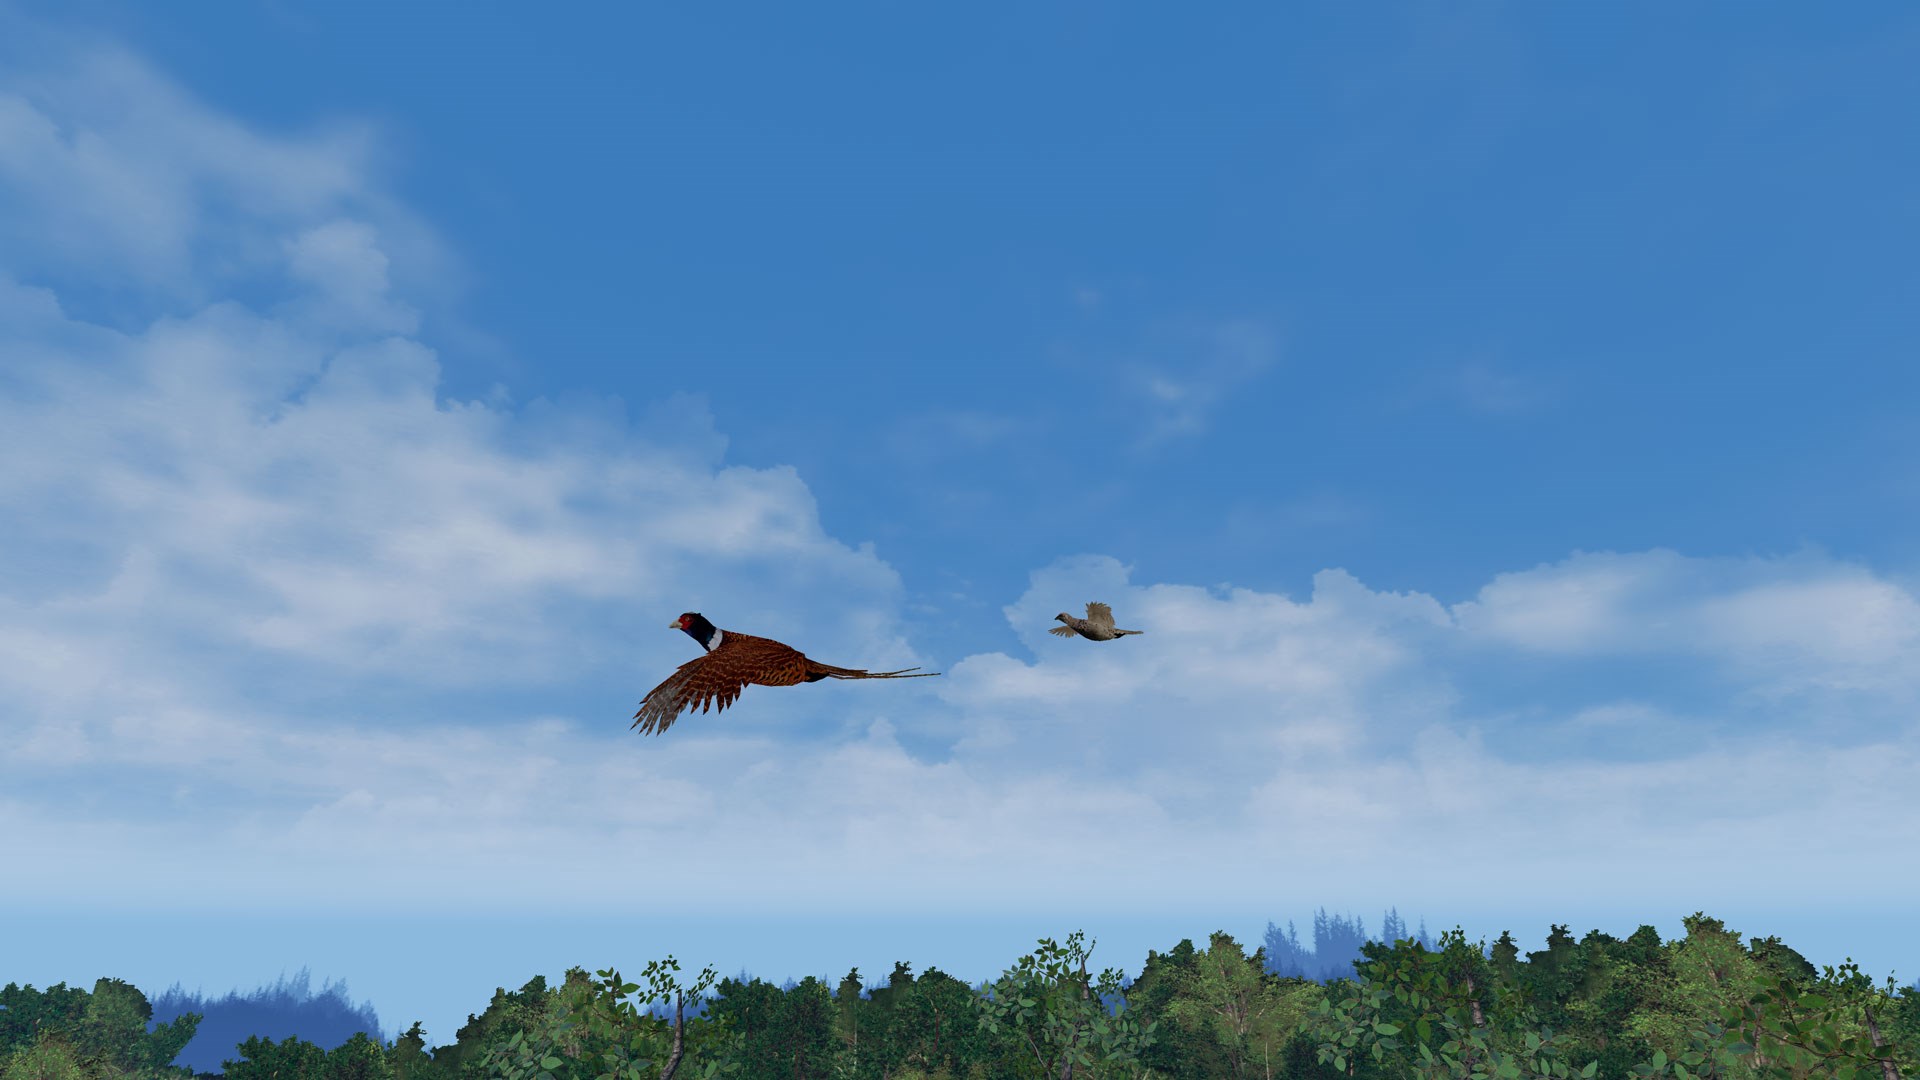 Pheasant flying in game